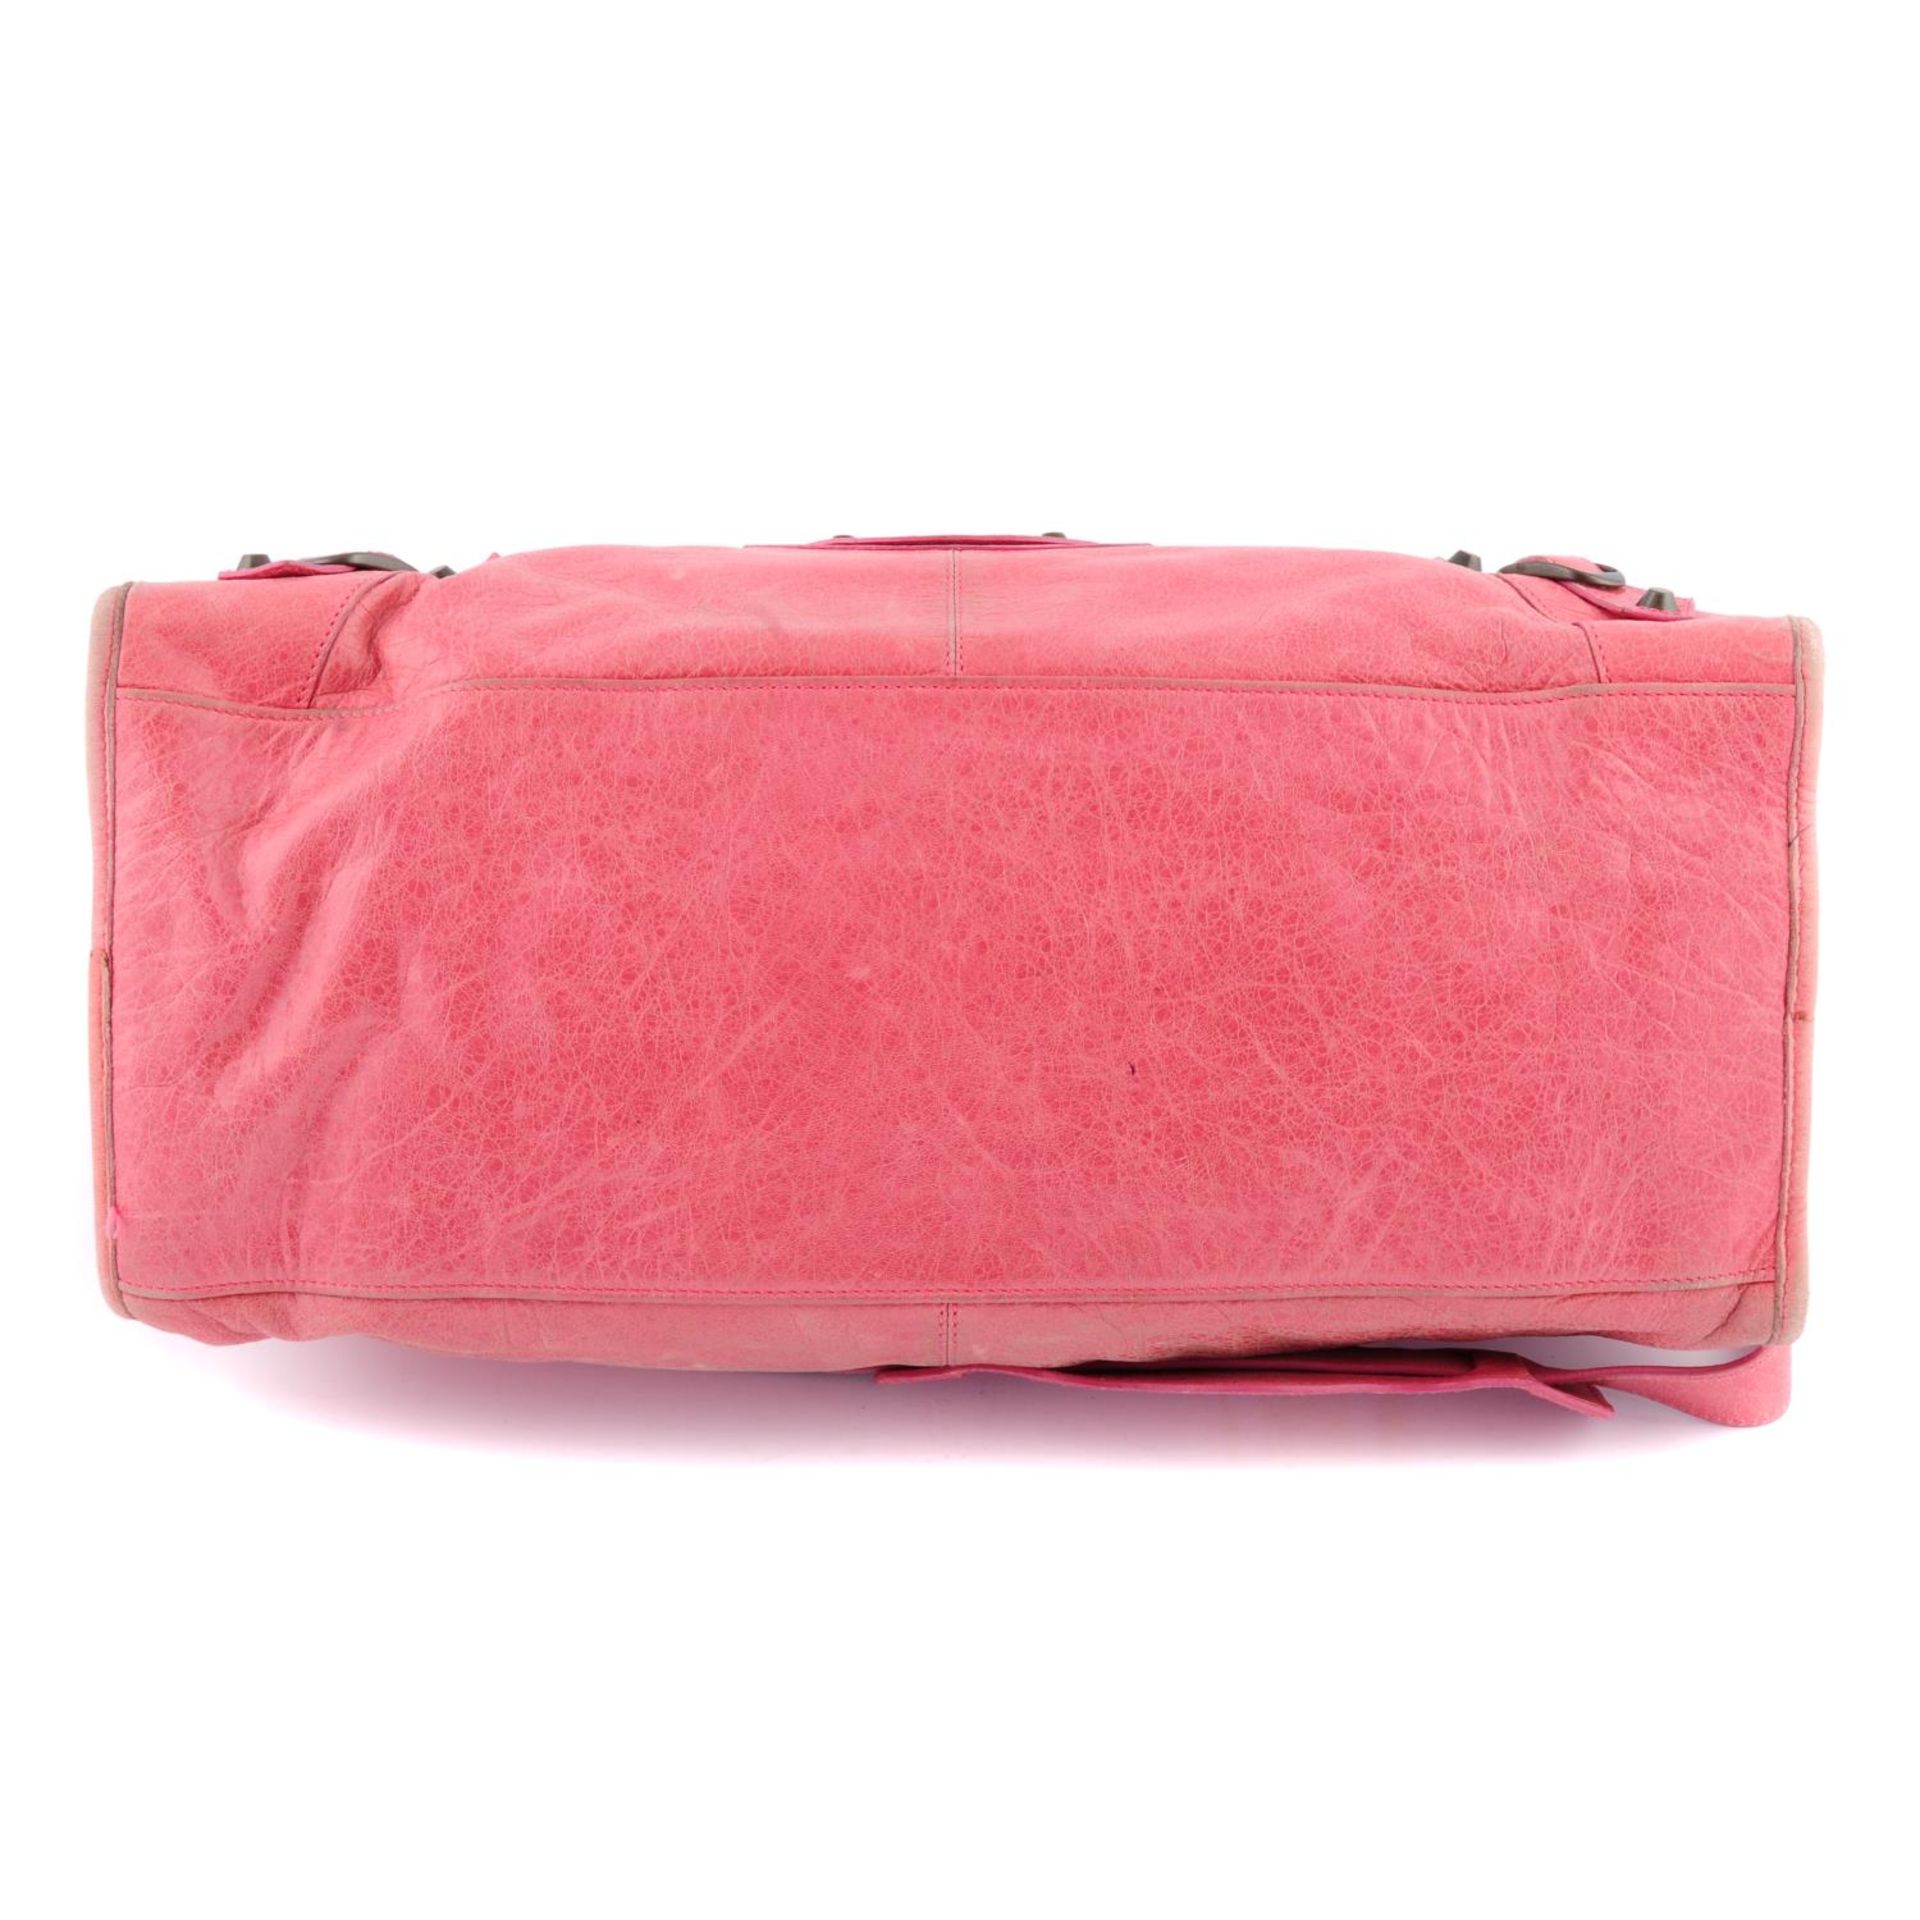 BALENCIAGA - a grenadine pink leather Part-Time handbag. - Bild 5 aus 6